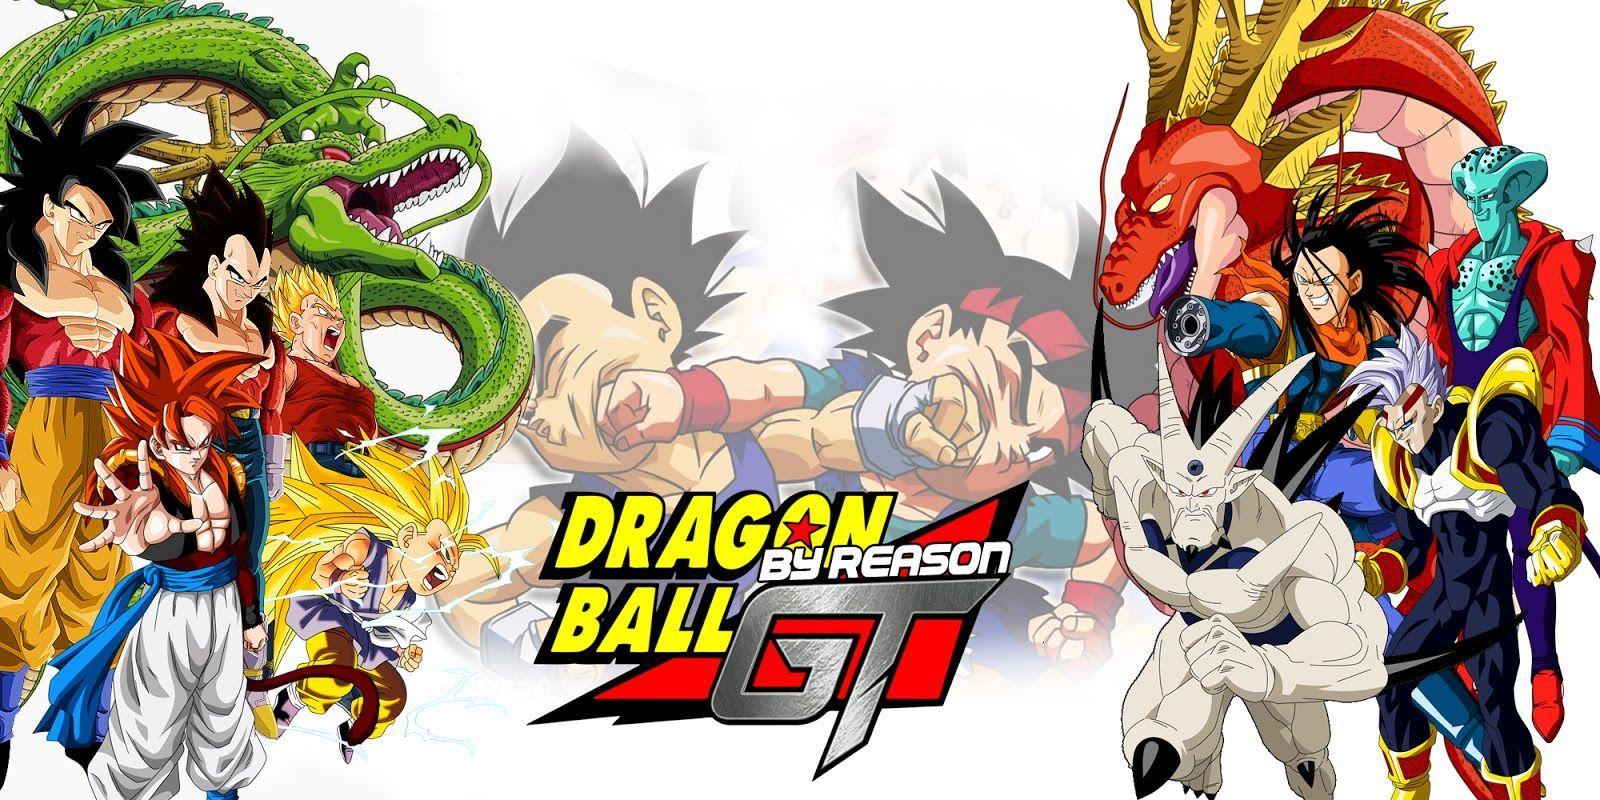 Dragon Ball GT HD Wallpaper Free Download for iphone. Cartoon